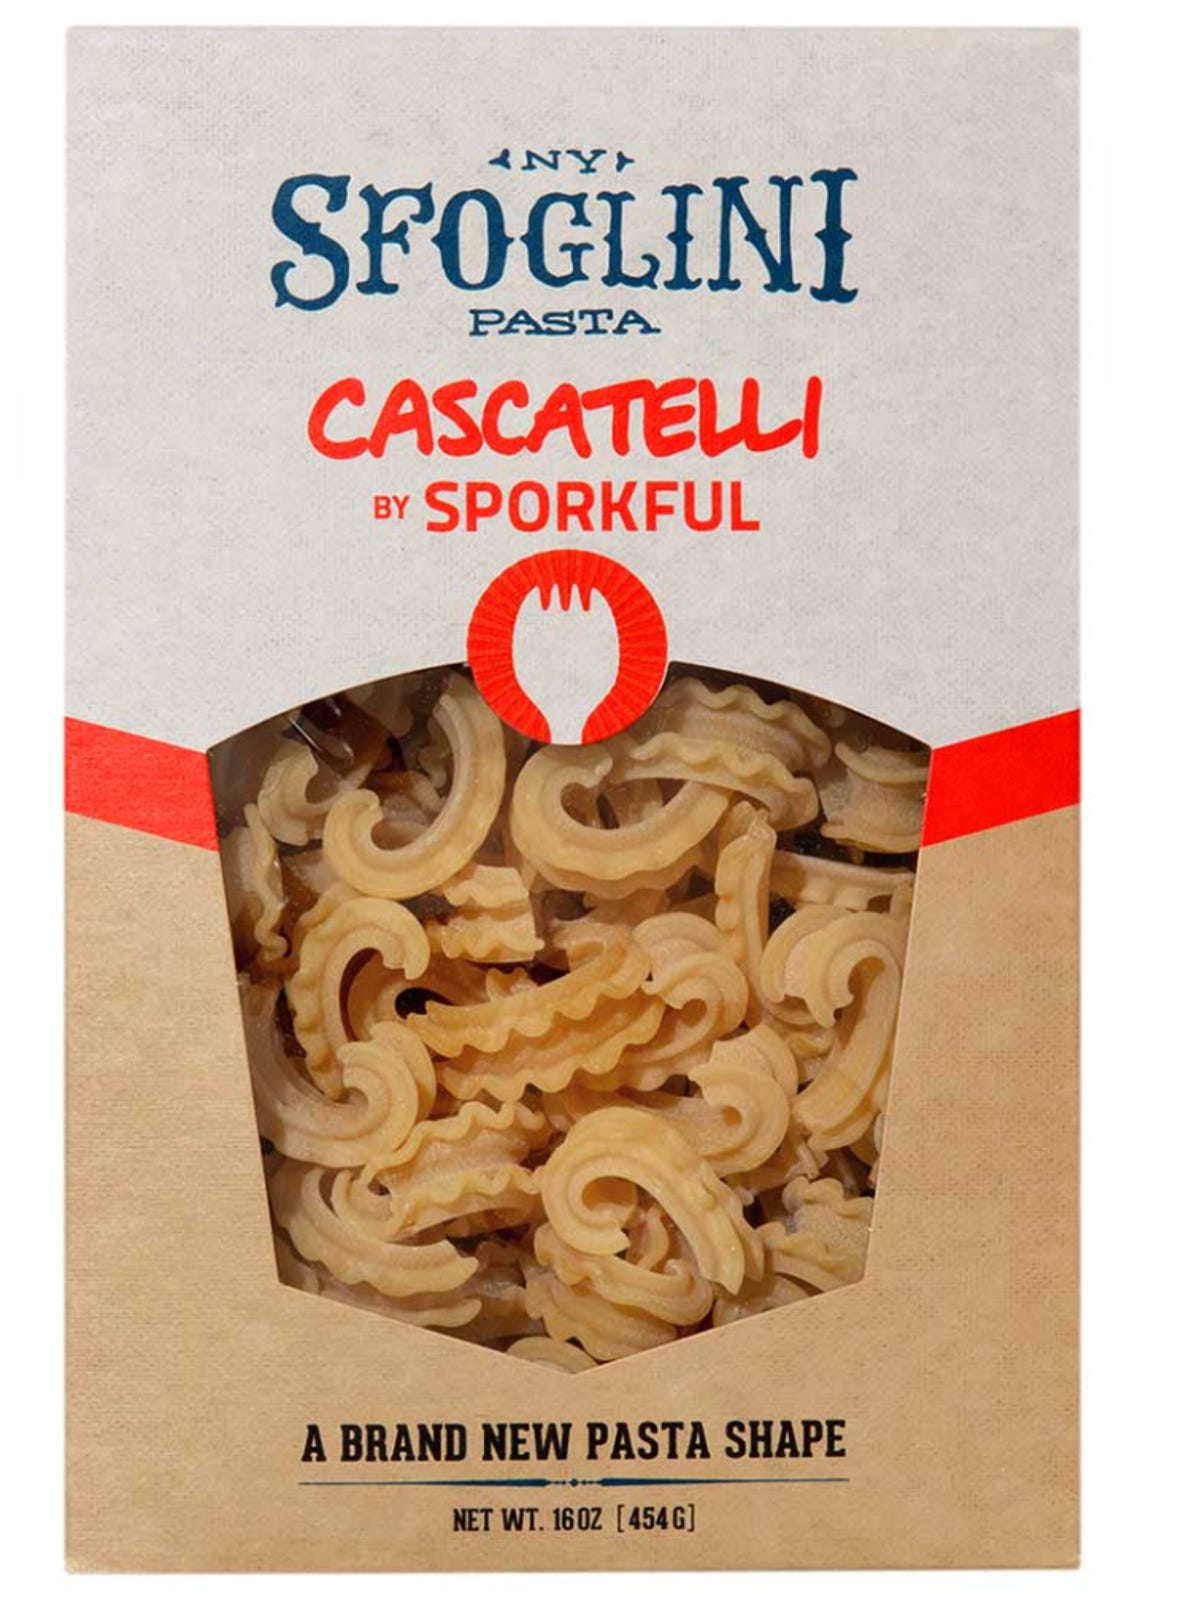 A box of Sfoglini's new Cascatelli by Sporkful pasta.